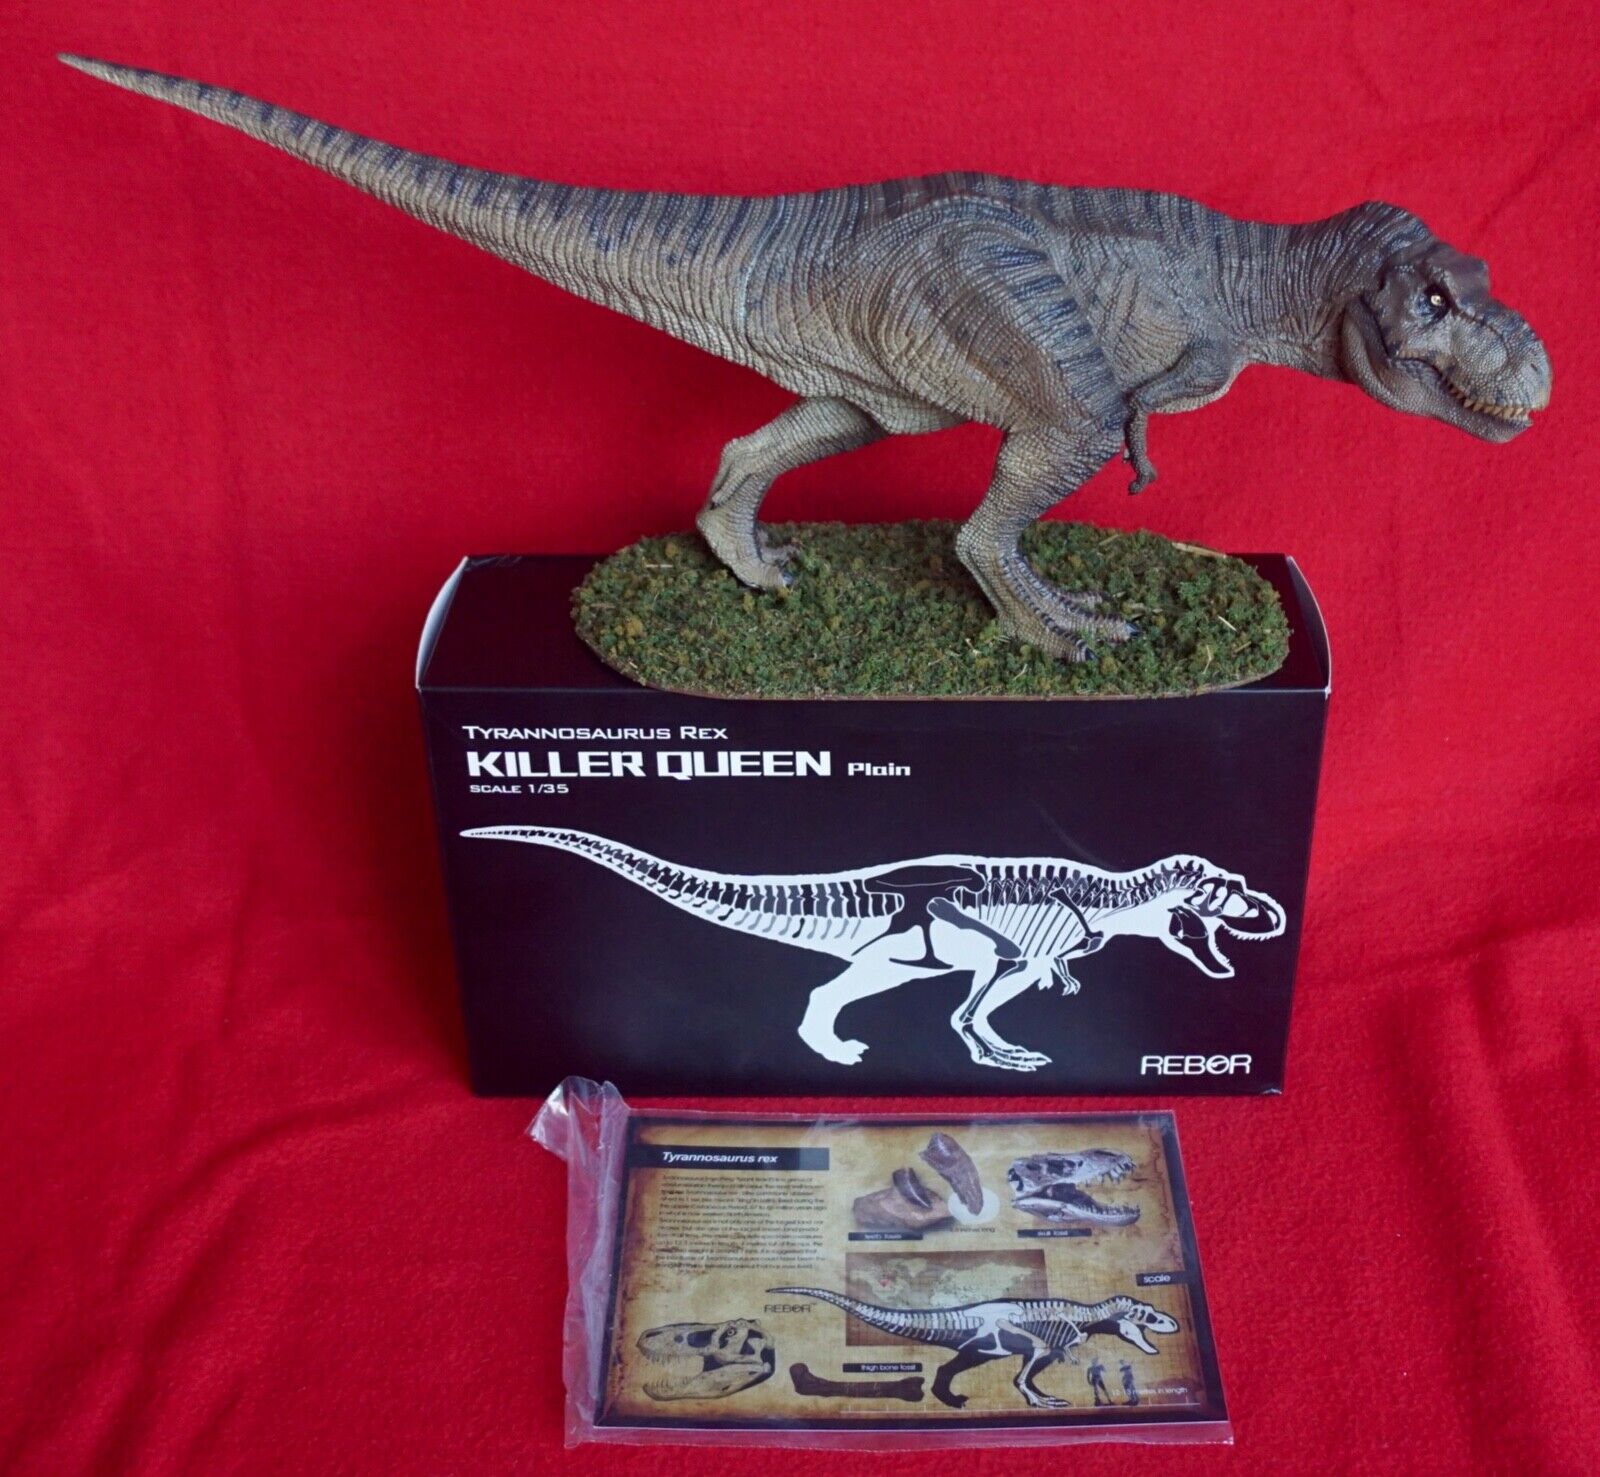 Rebor Tyrannosaurus Rex Killer Queen (Plain) on Base - 1/35 - w box & info card